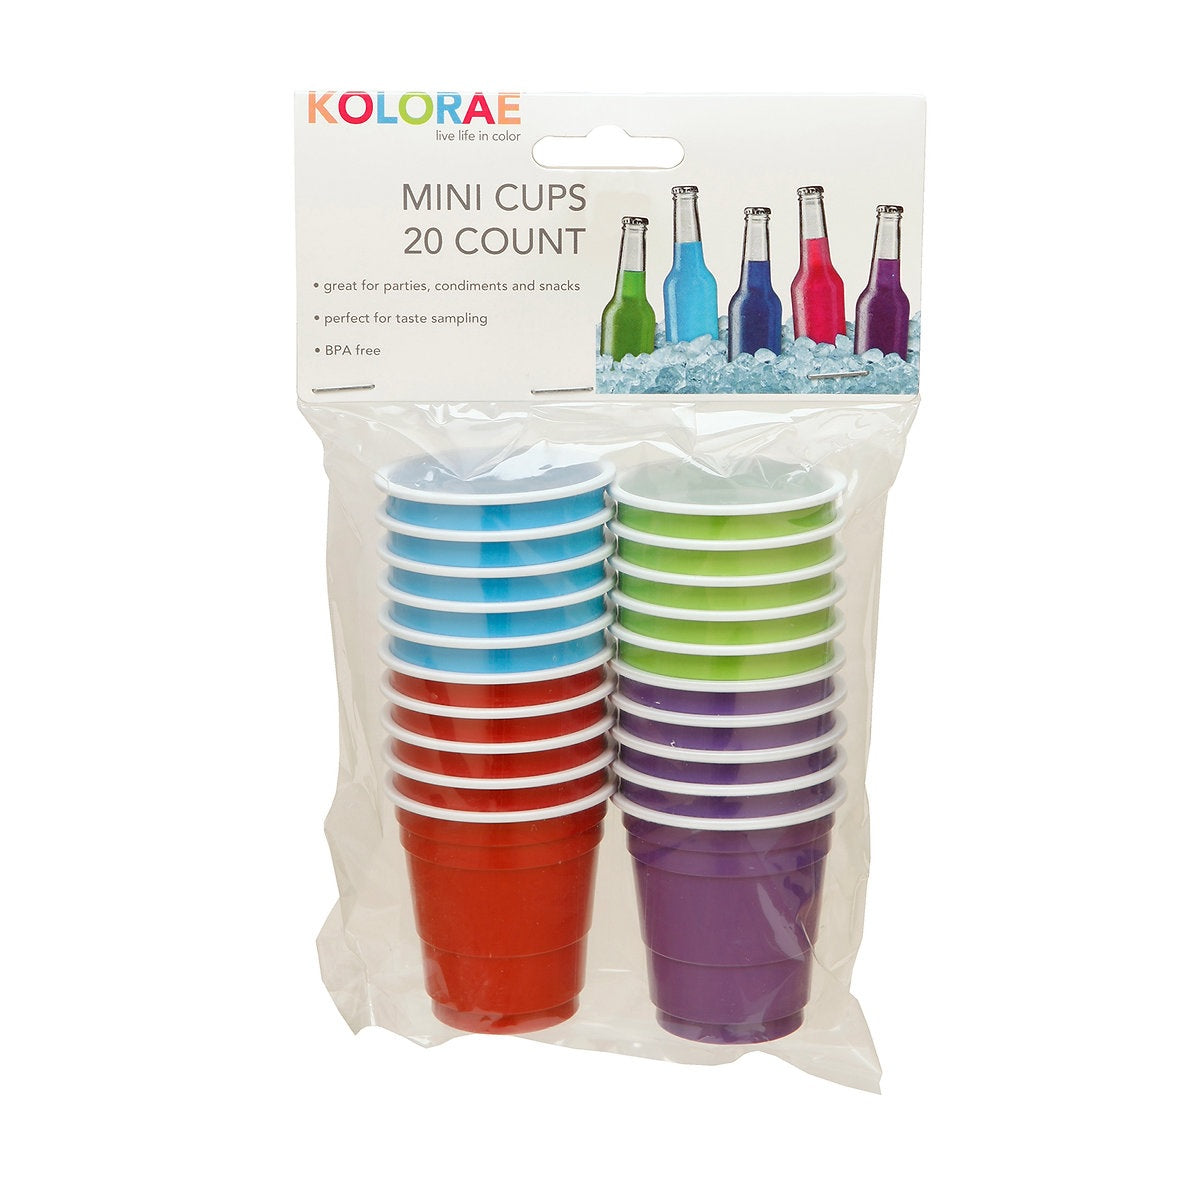 Kolorae KOL-0247 Disposable Shot Glass, Assorted Color, Polypropylene